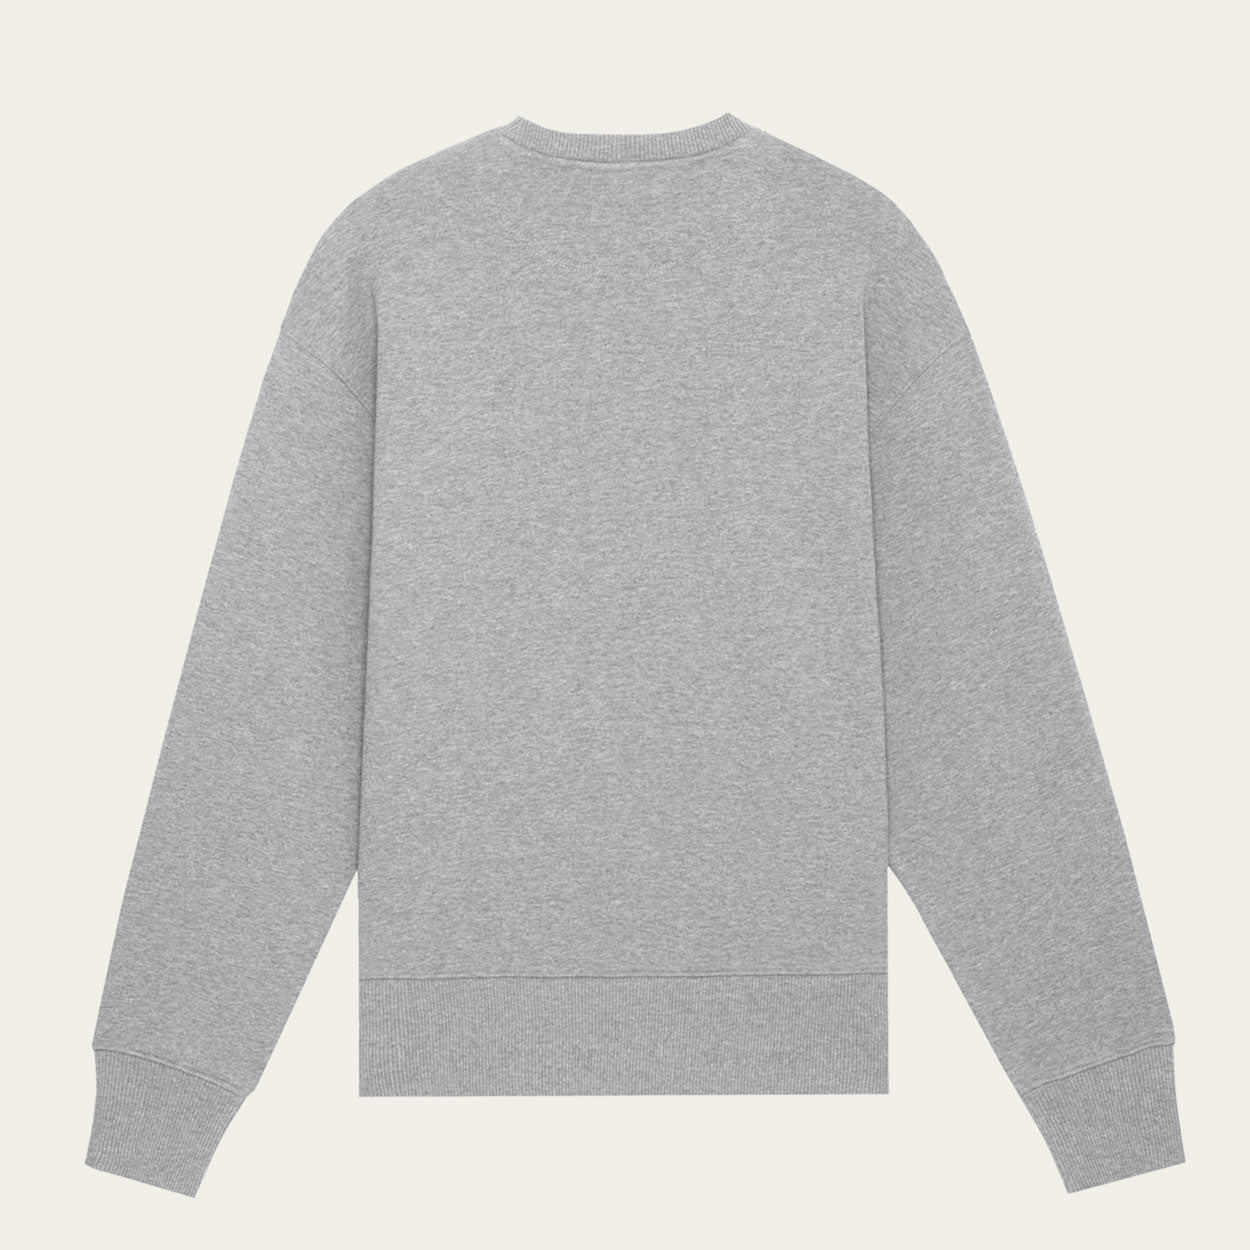 ROFFA. heavy sweater oversized - groot - 100% organisch katoen